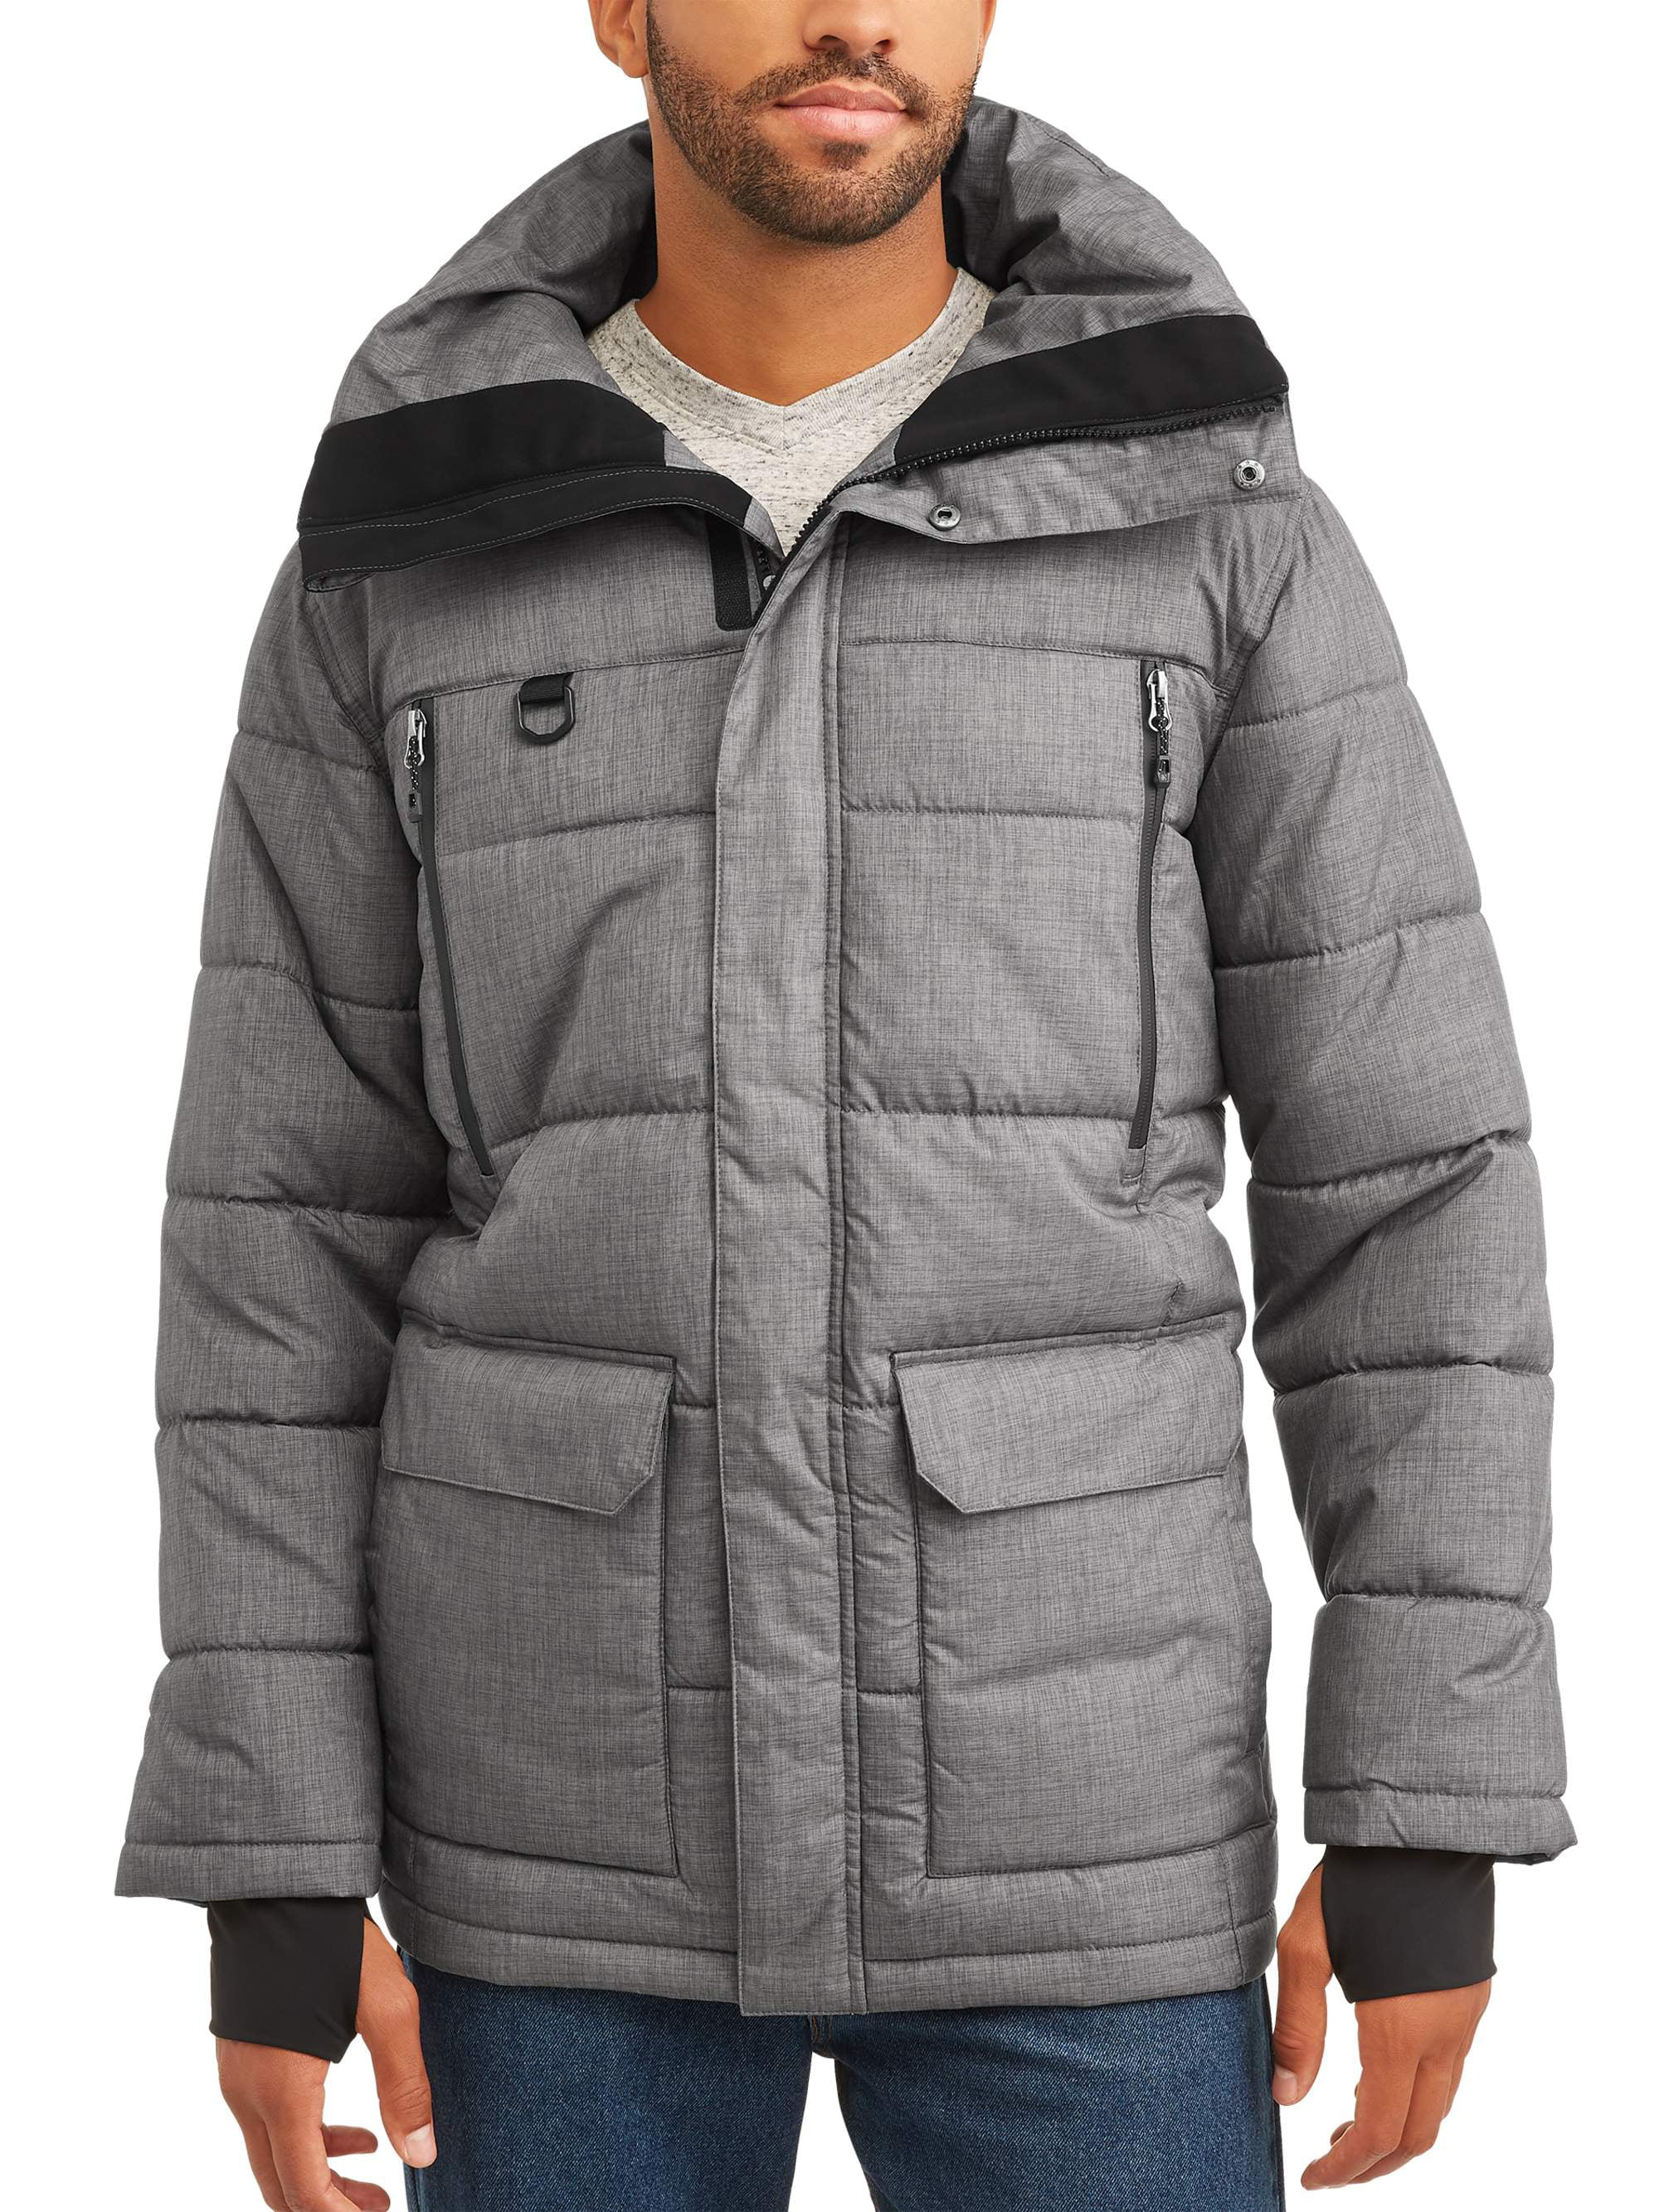 Men's Parka Jacket, up to size 5XL - Walmart.com